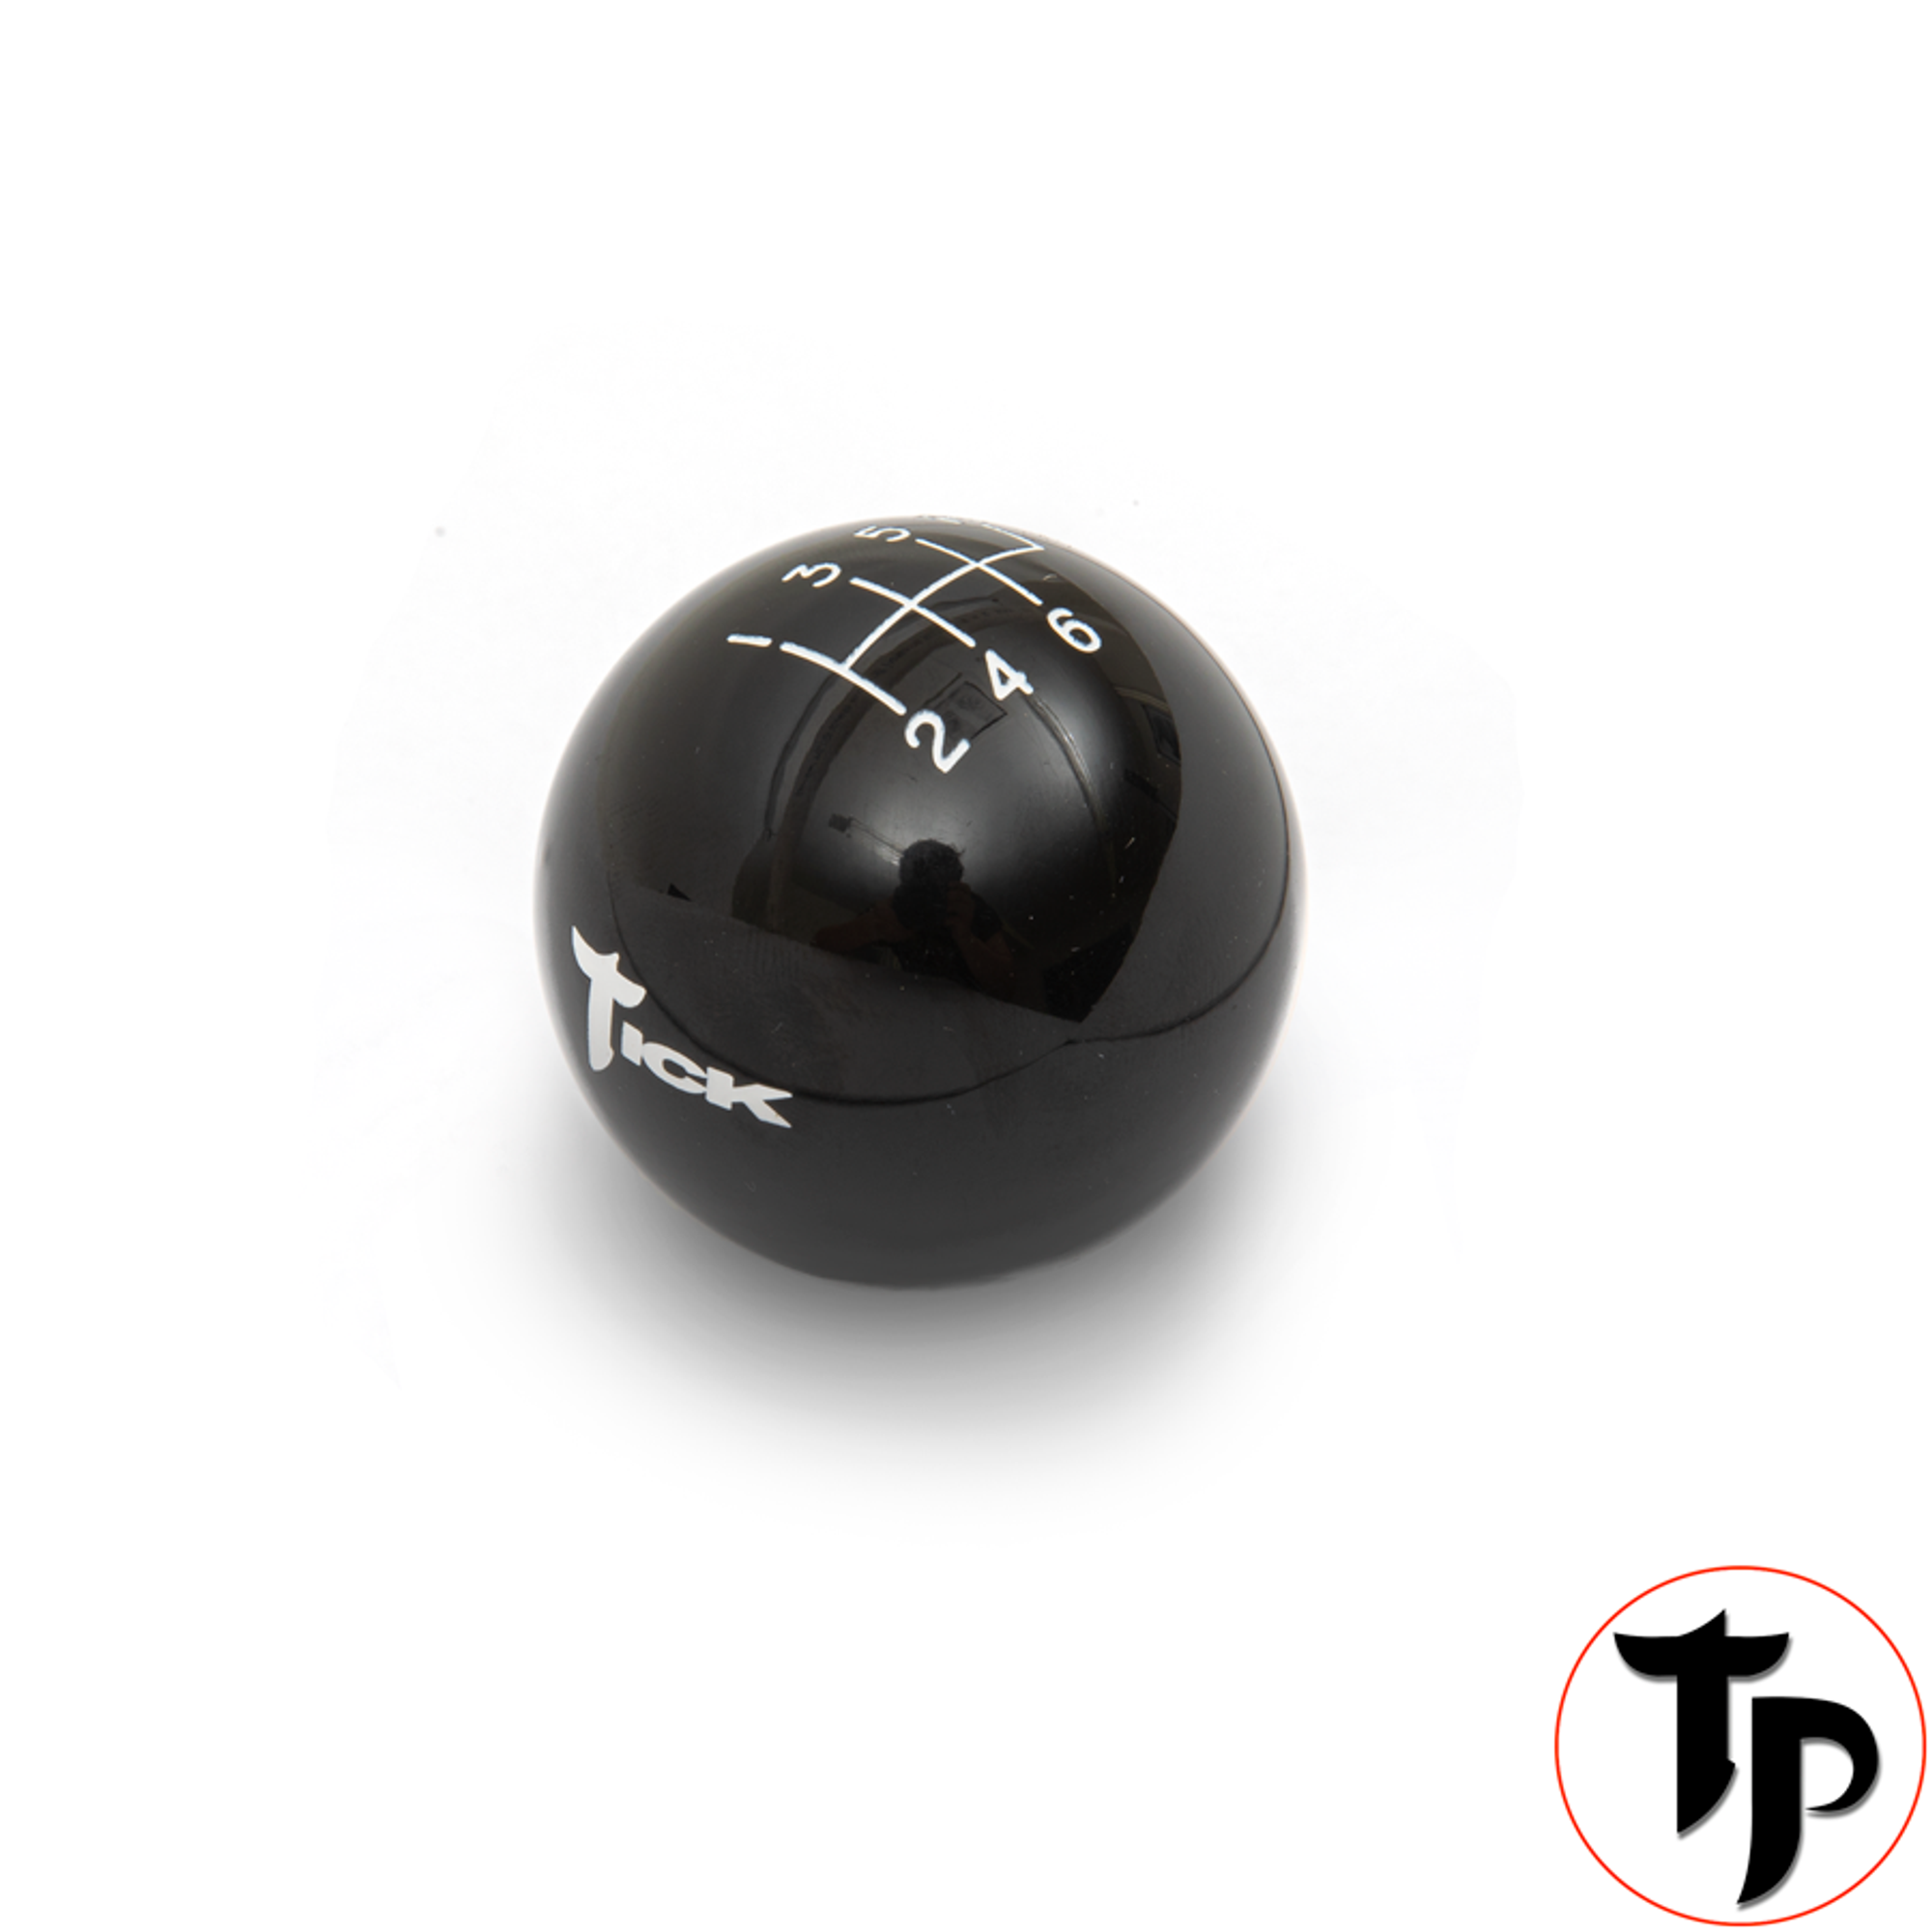 Tick Performance Black 6 Speed Shifter Ball